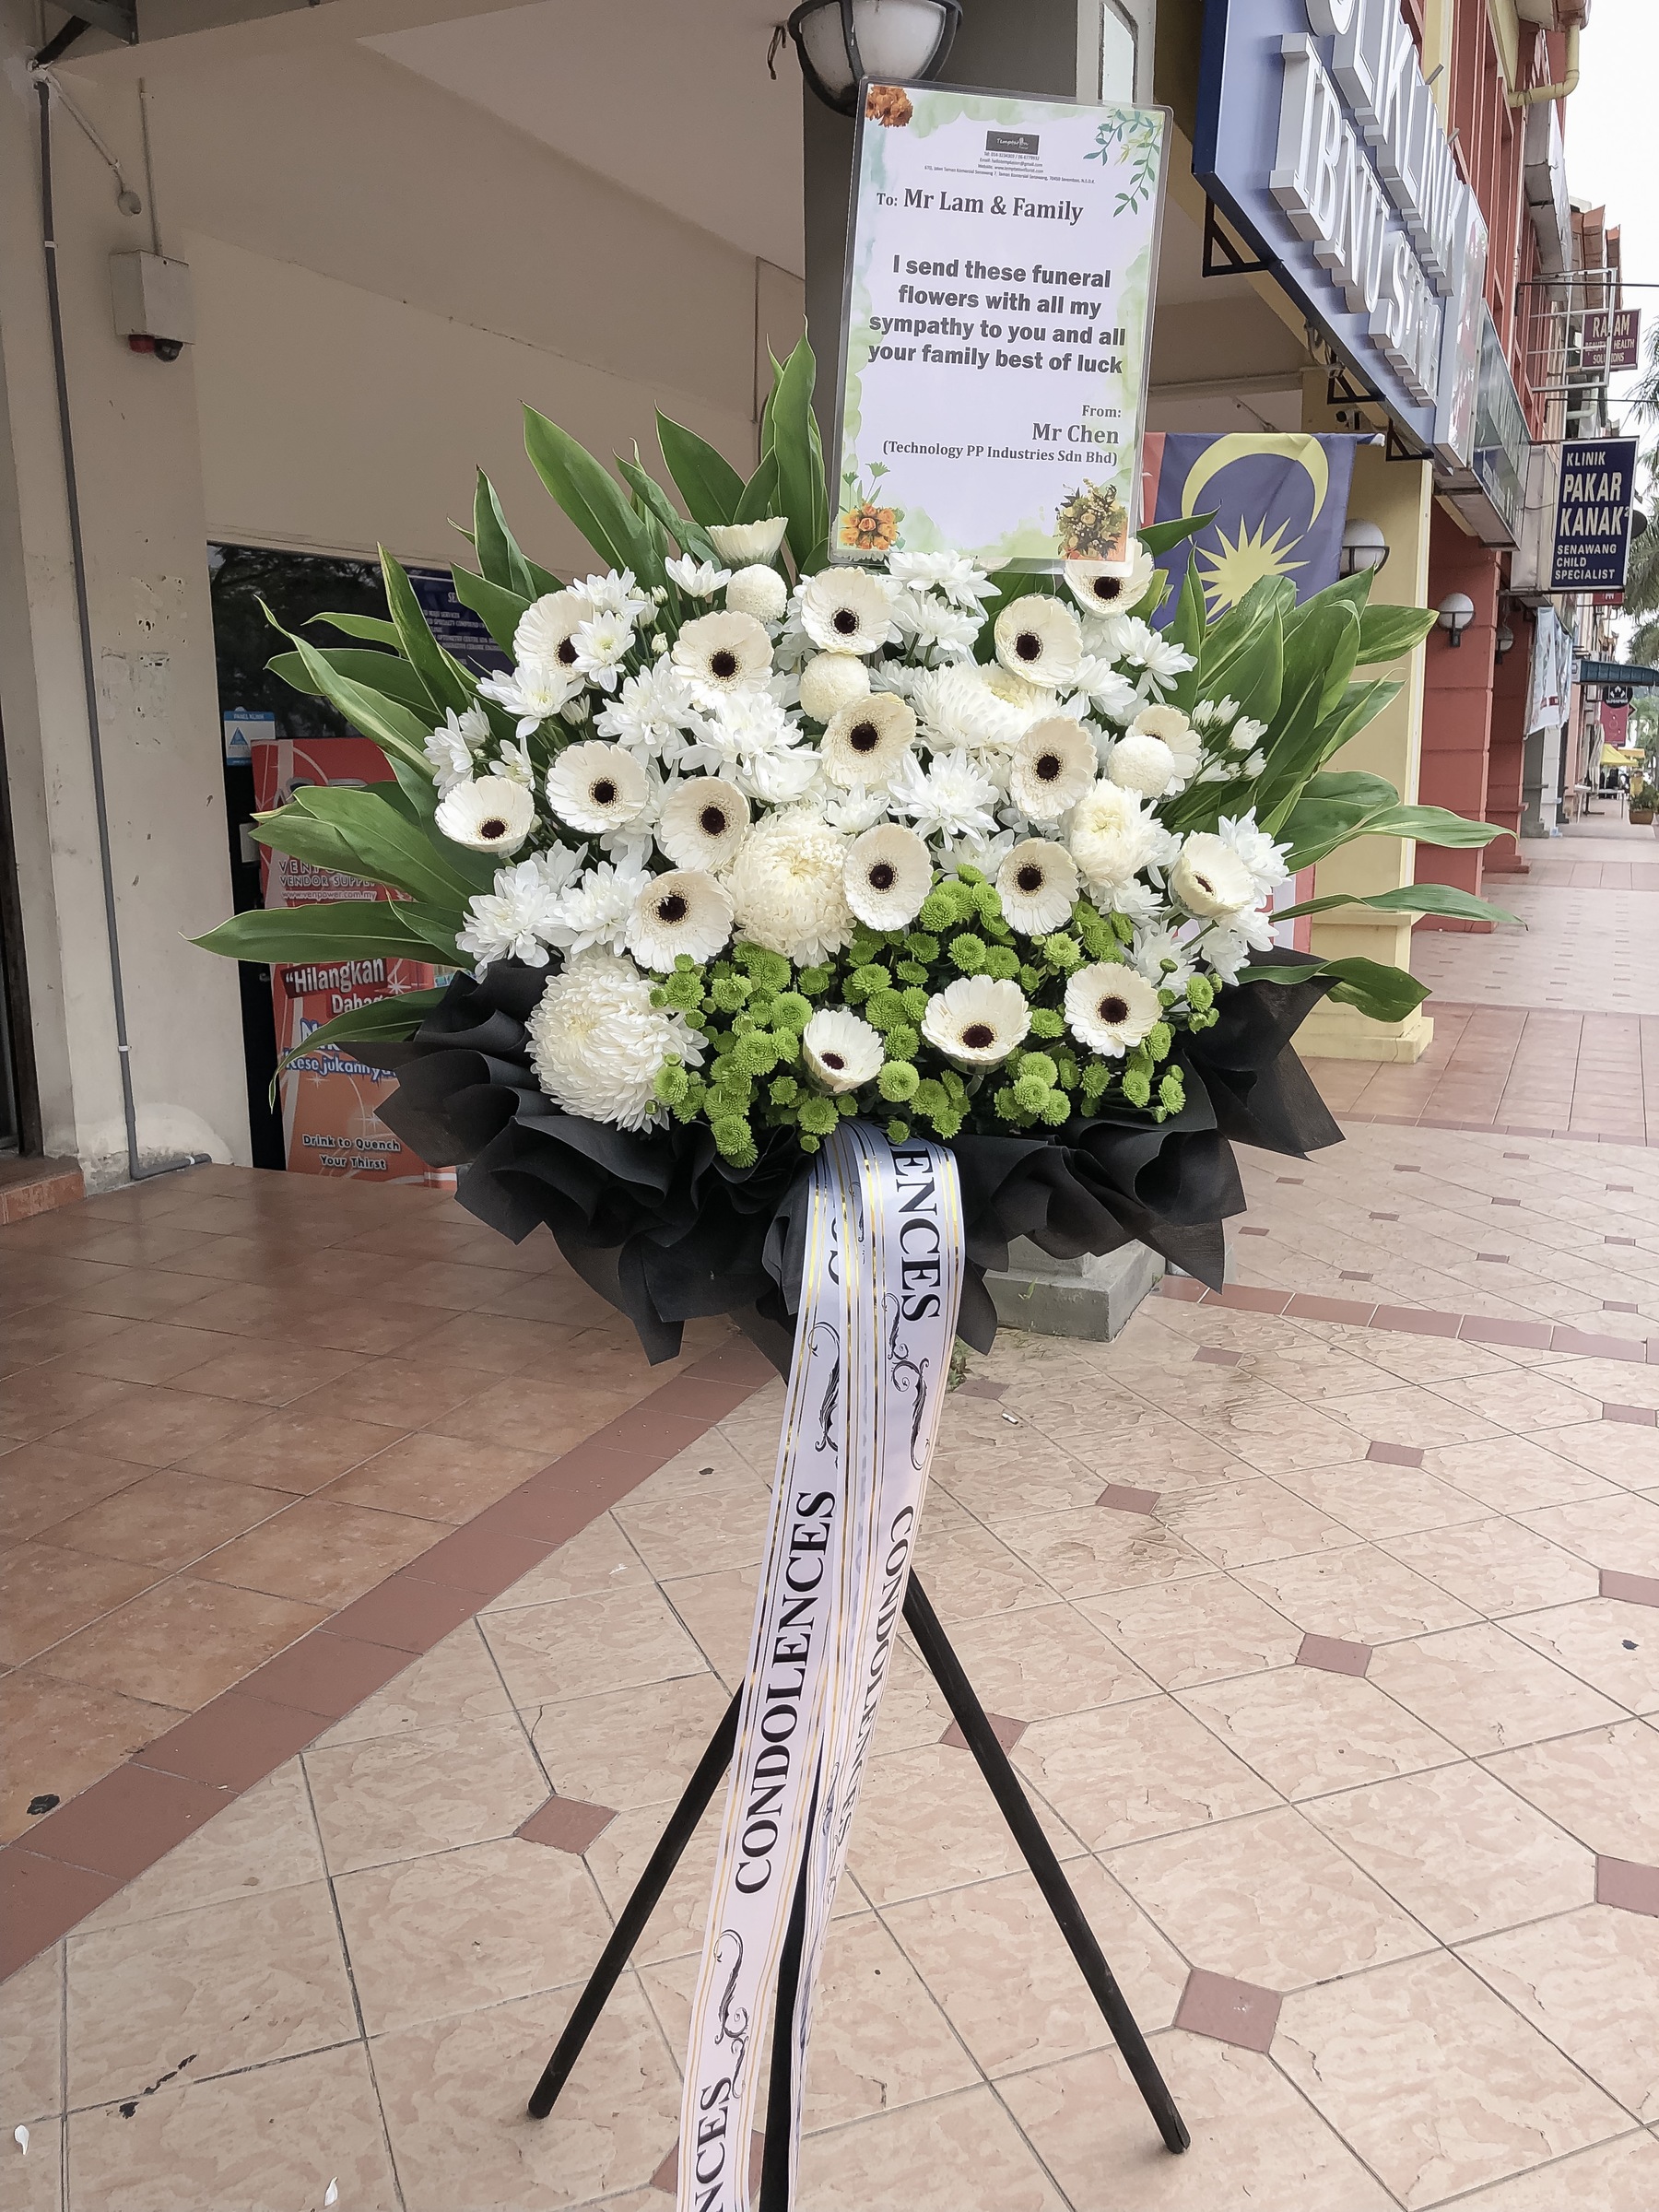 Condolence flower